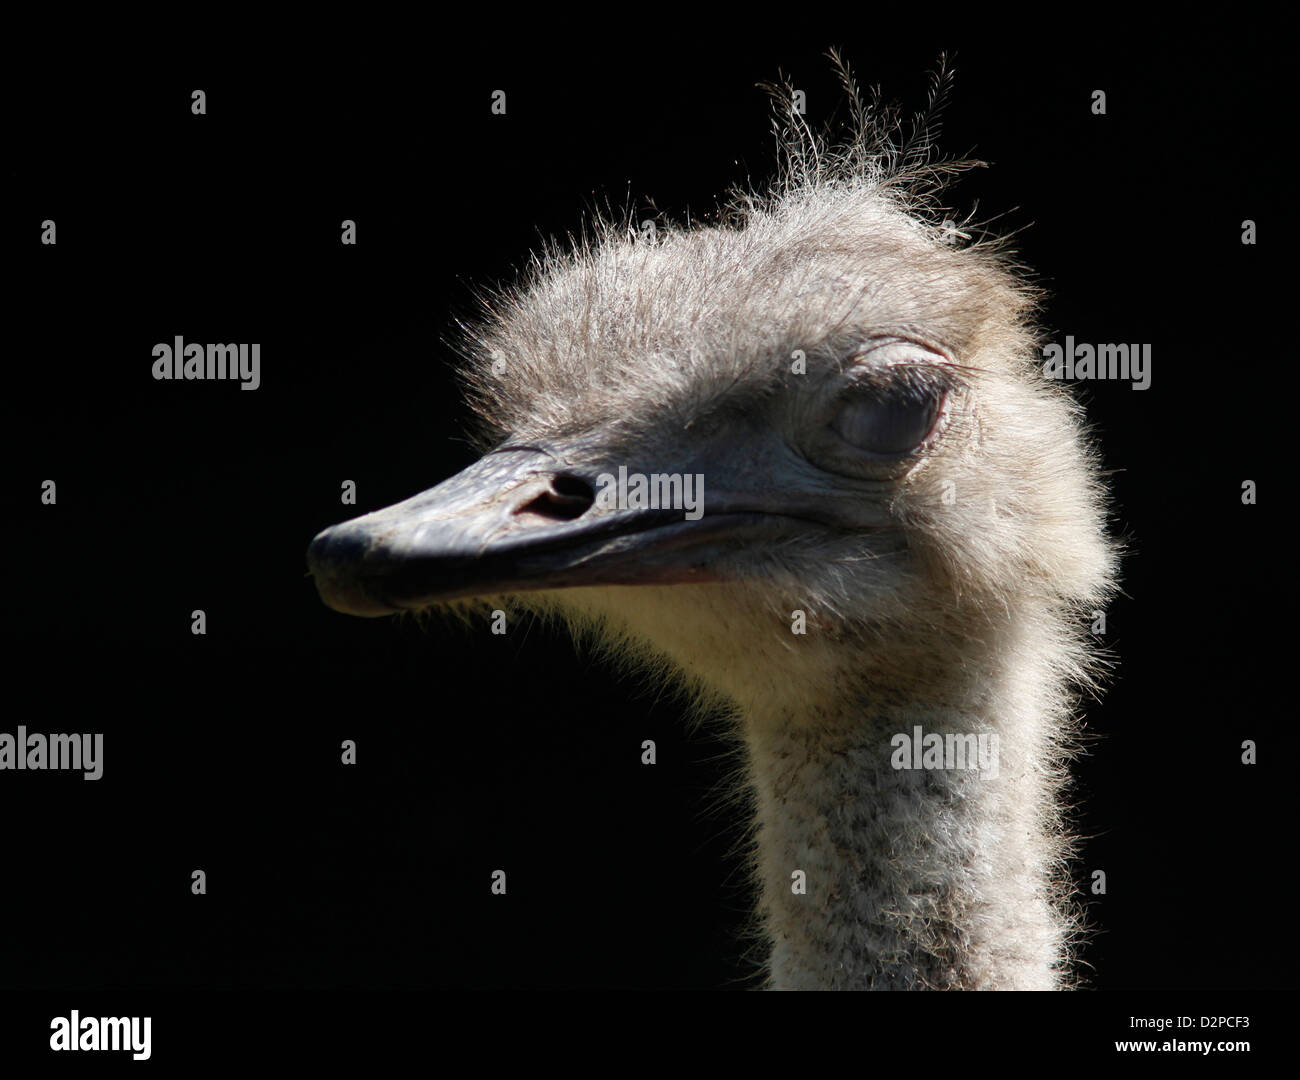 Cerca de avestruz cabeza Memphis Zoo ave no voladora Foto de stock